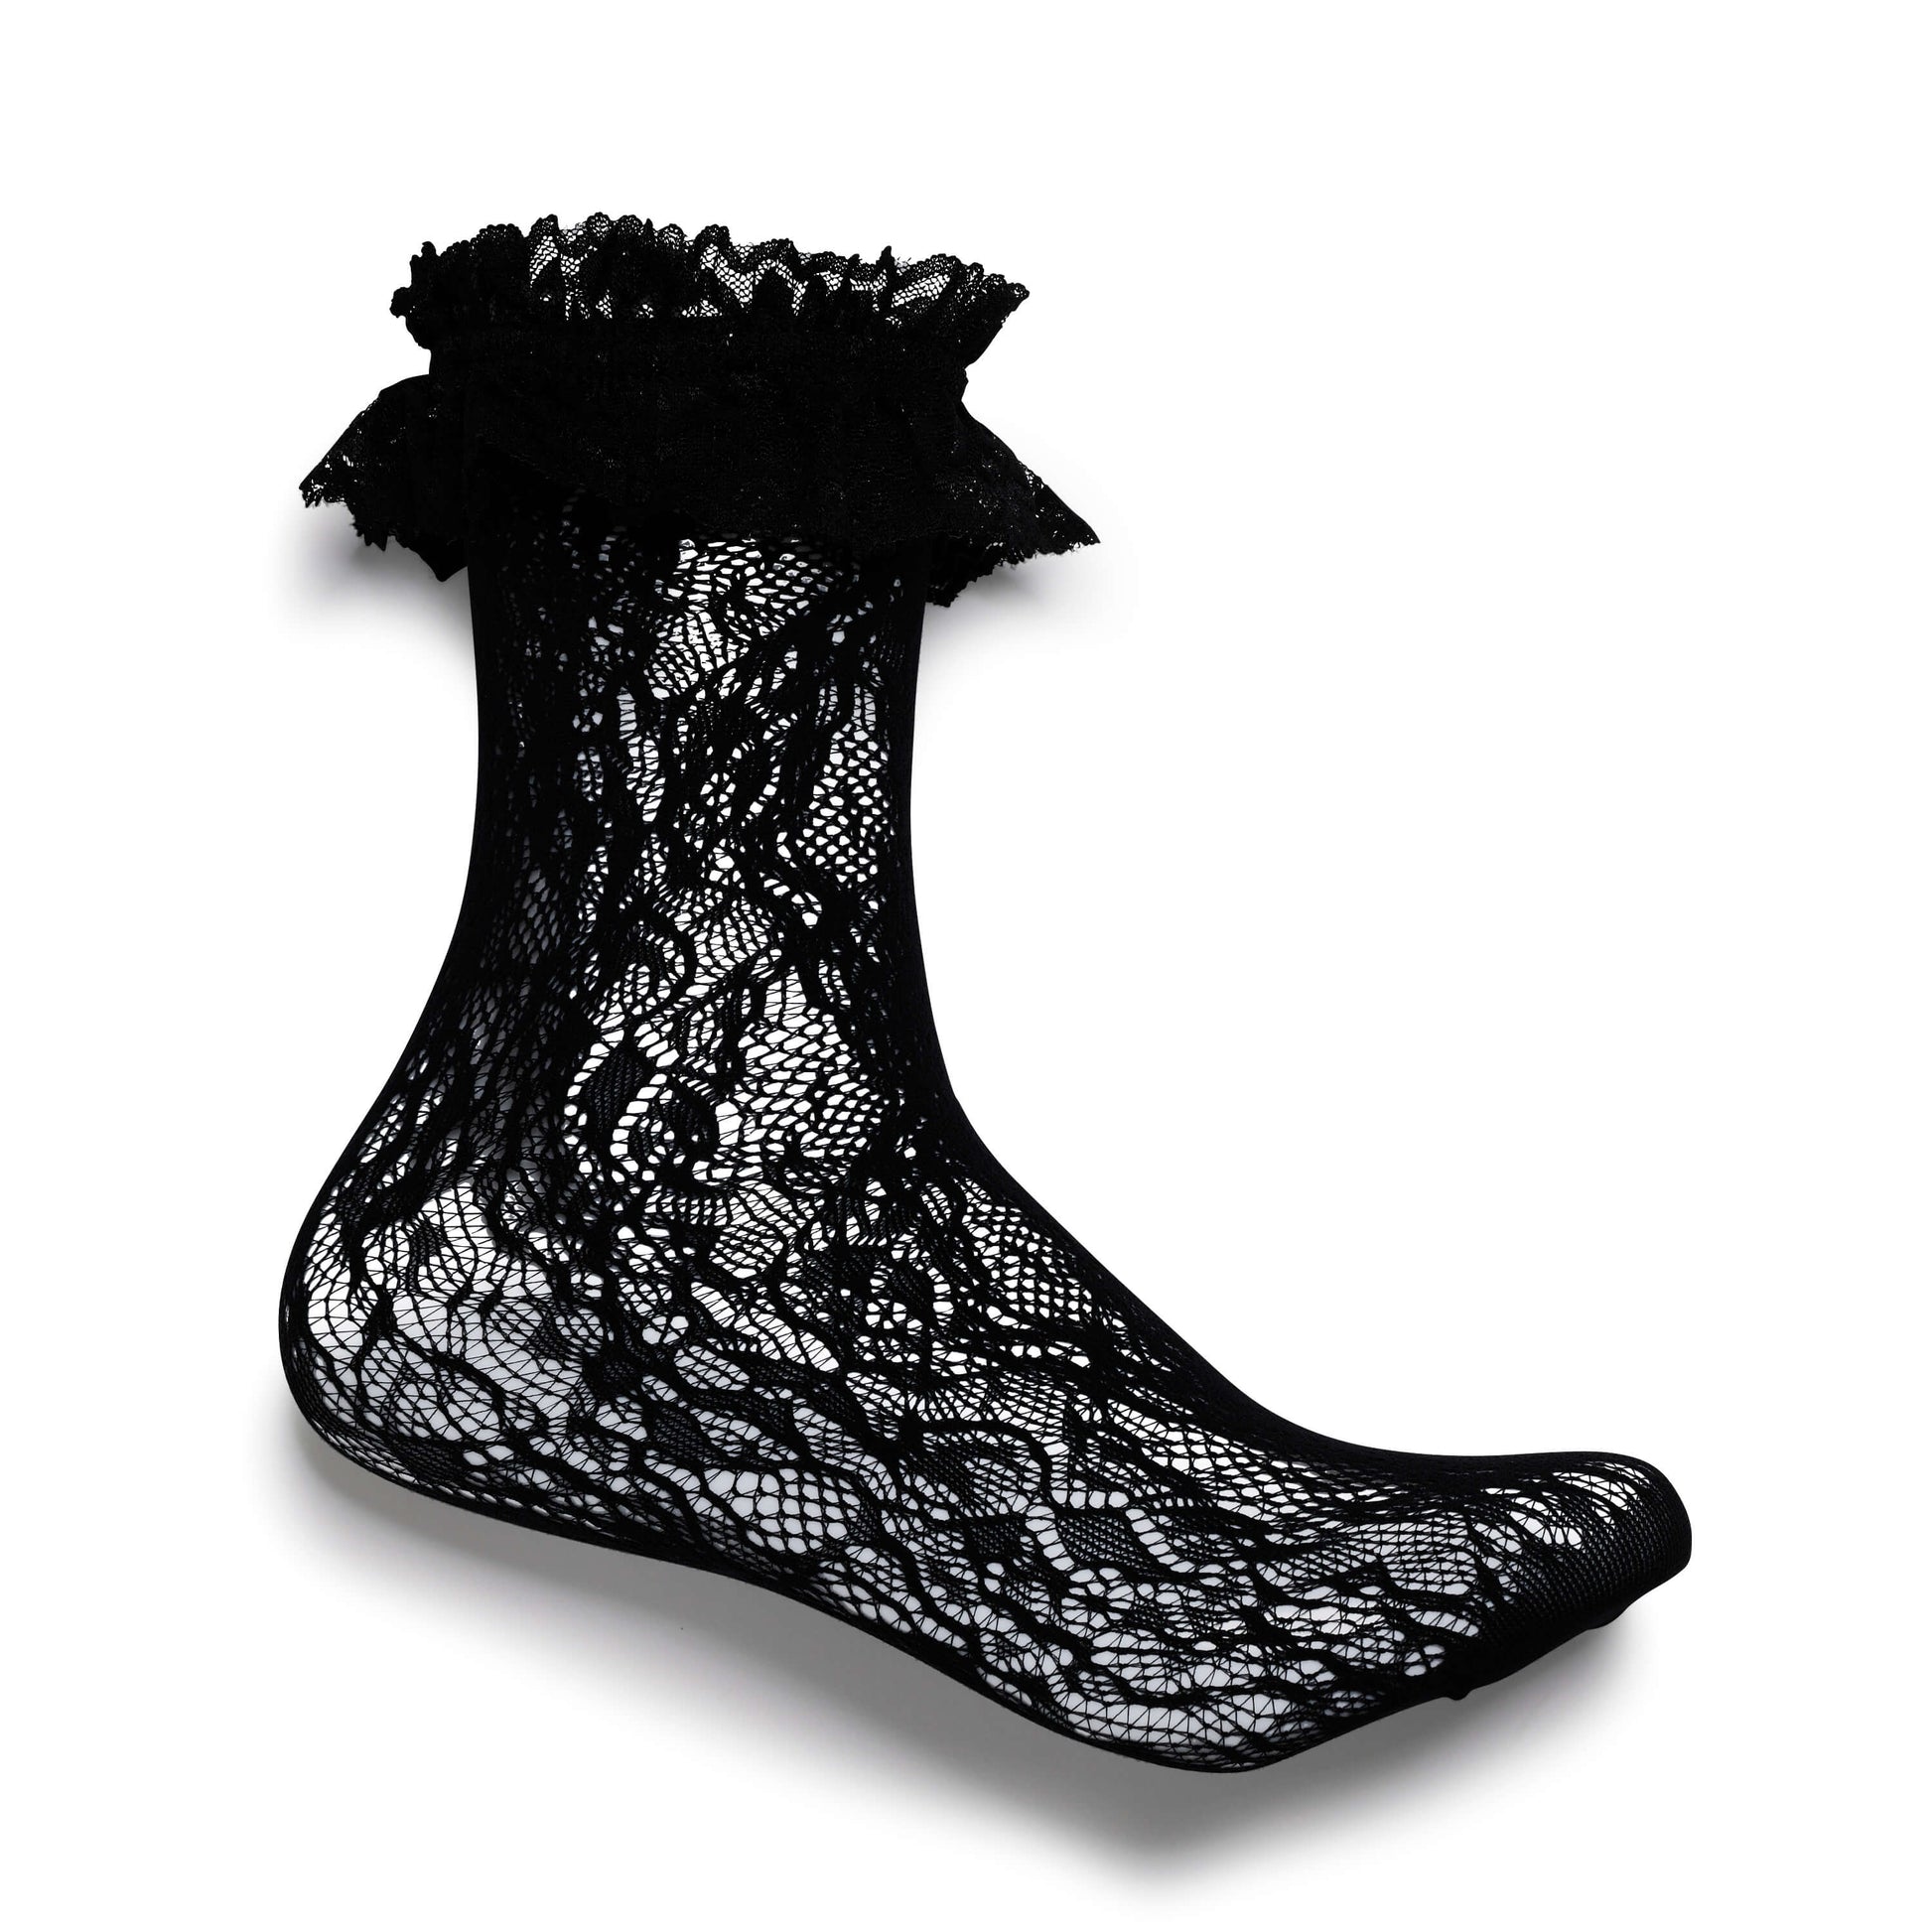 Heiress Black Lace Ruffle Socks - Accessories - KOI Footwear - Black - Side View